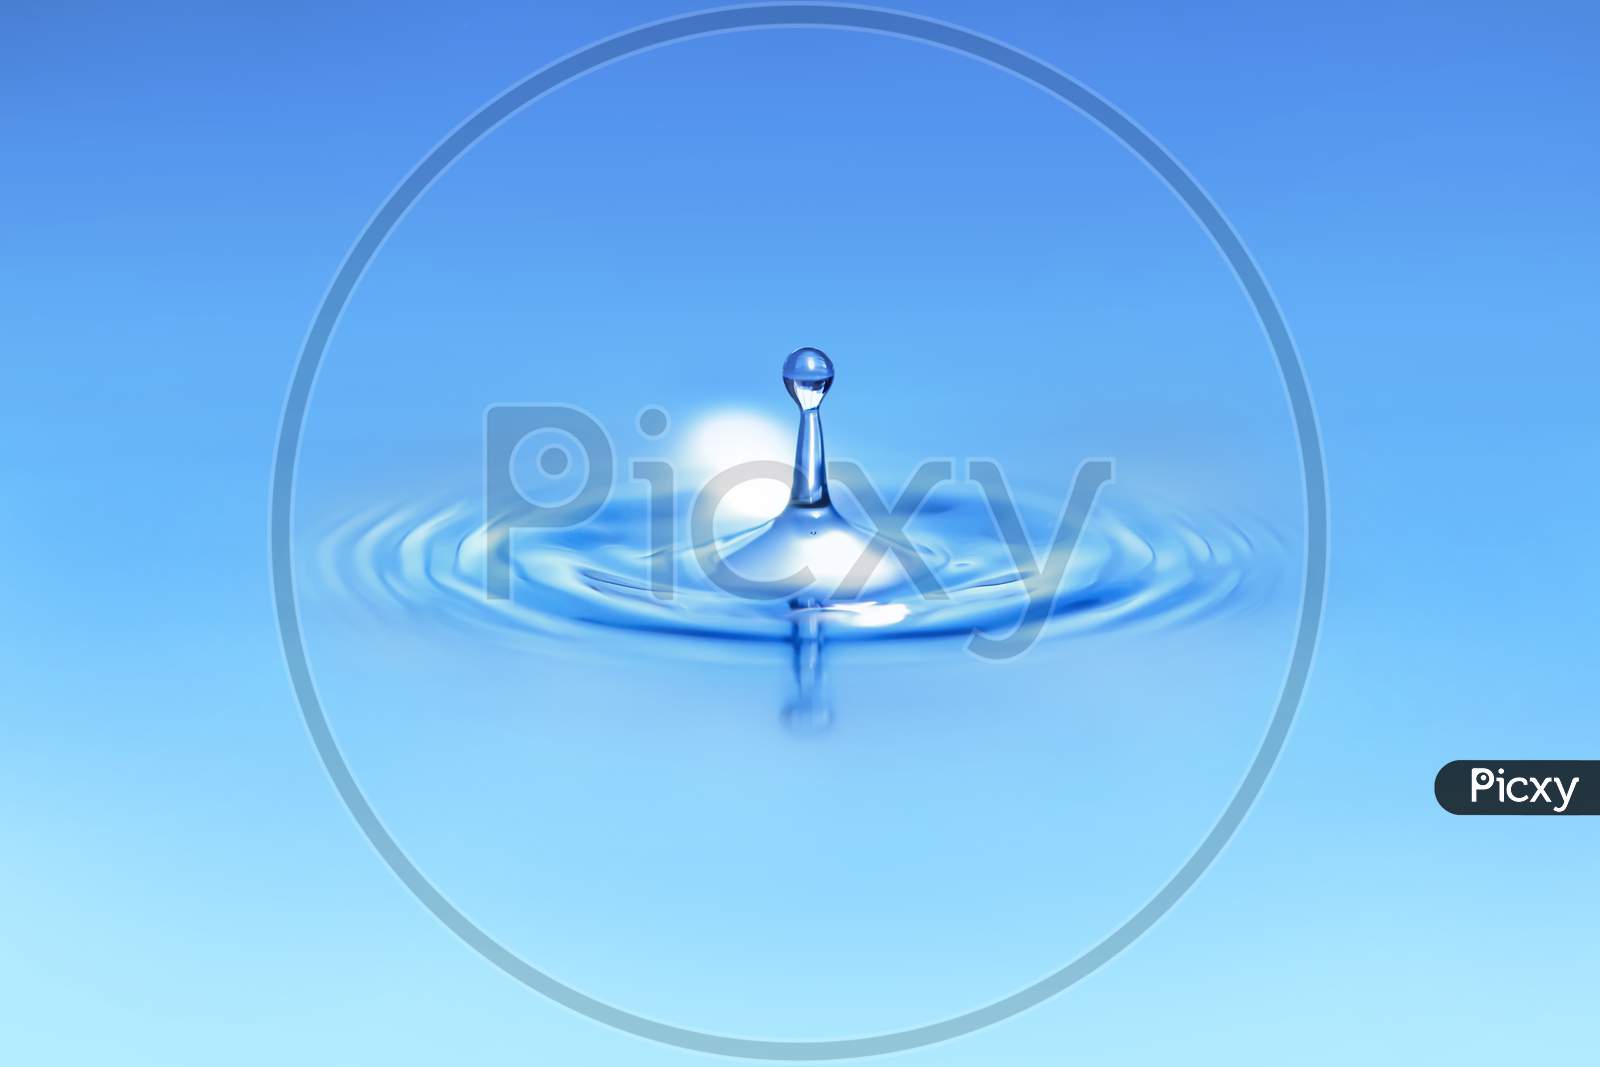 Closeup On Drop Of Water Falling In A Blue Liquid.